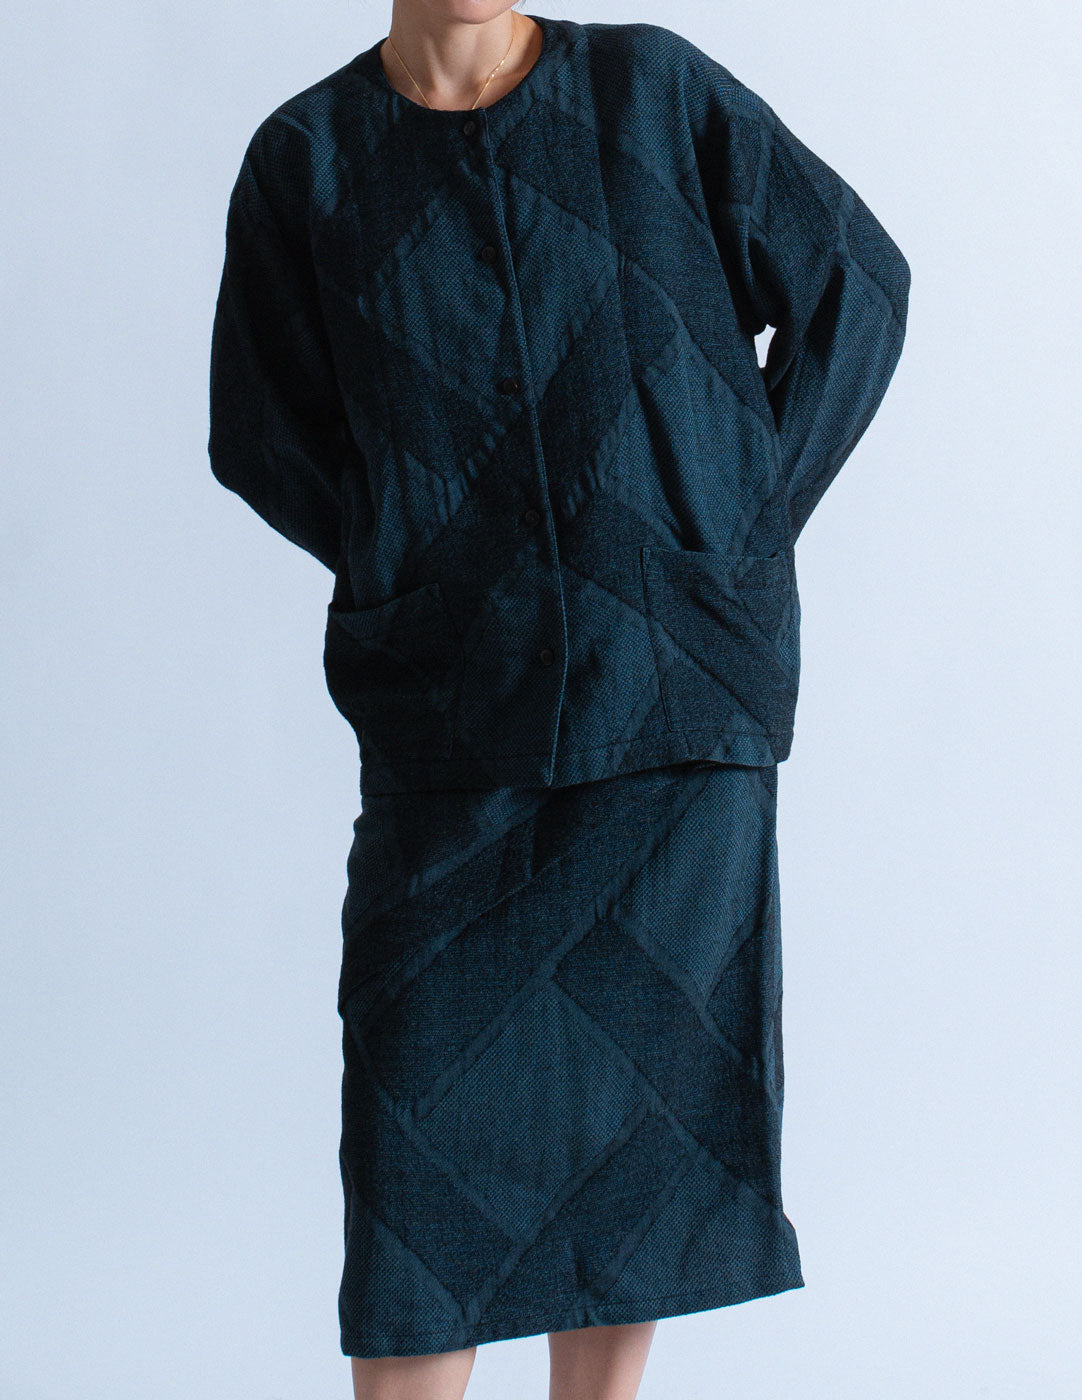 Issey Miyake vintage textured wool skirt set front detail